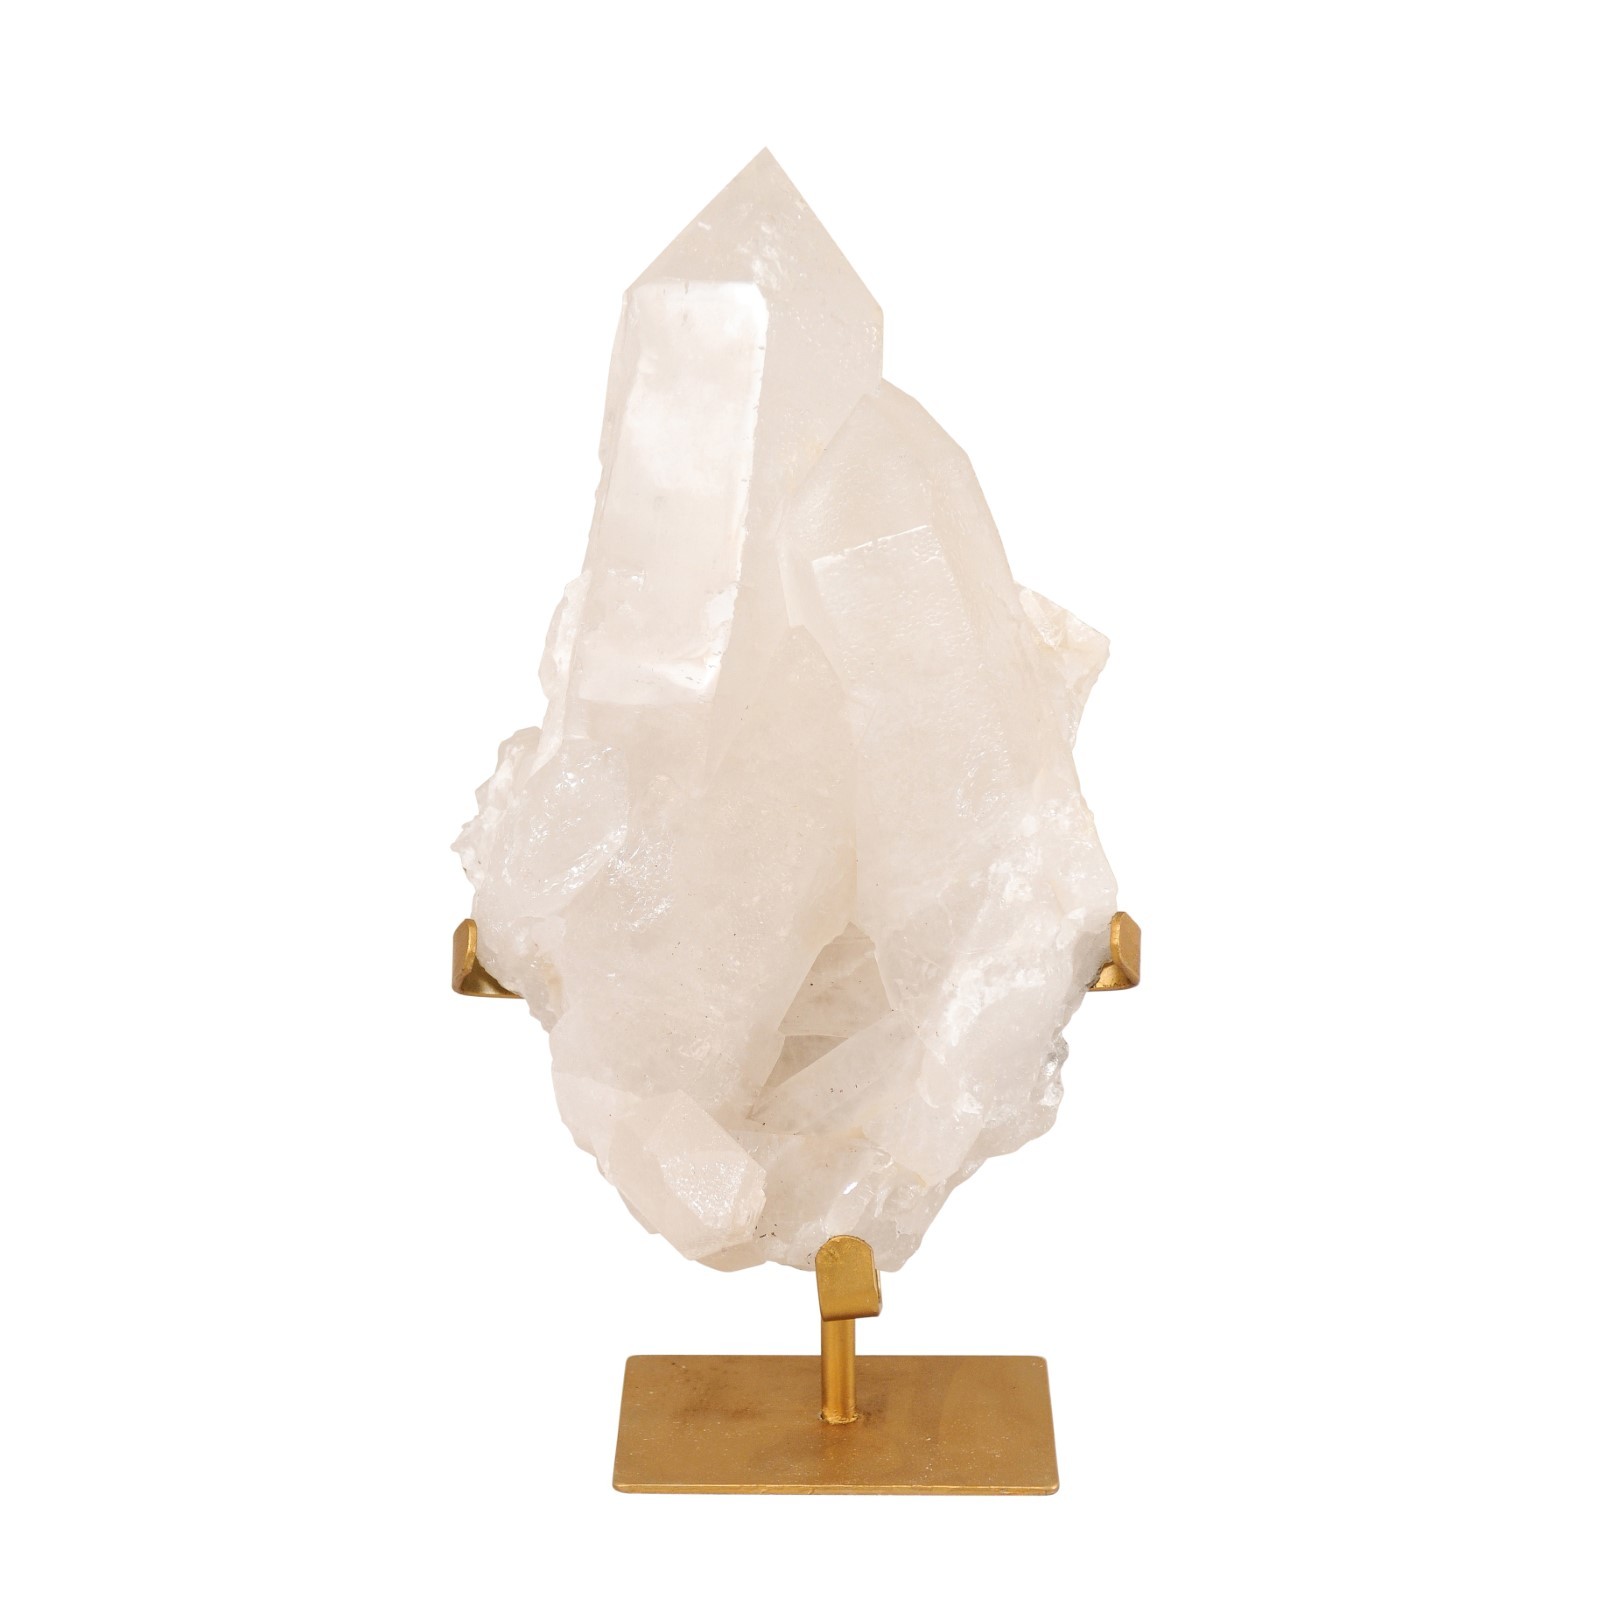 A Large Quartz Crystal on Golden Stand